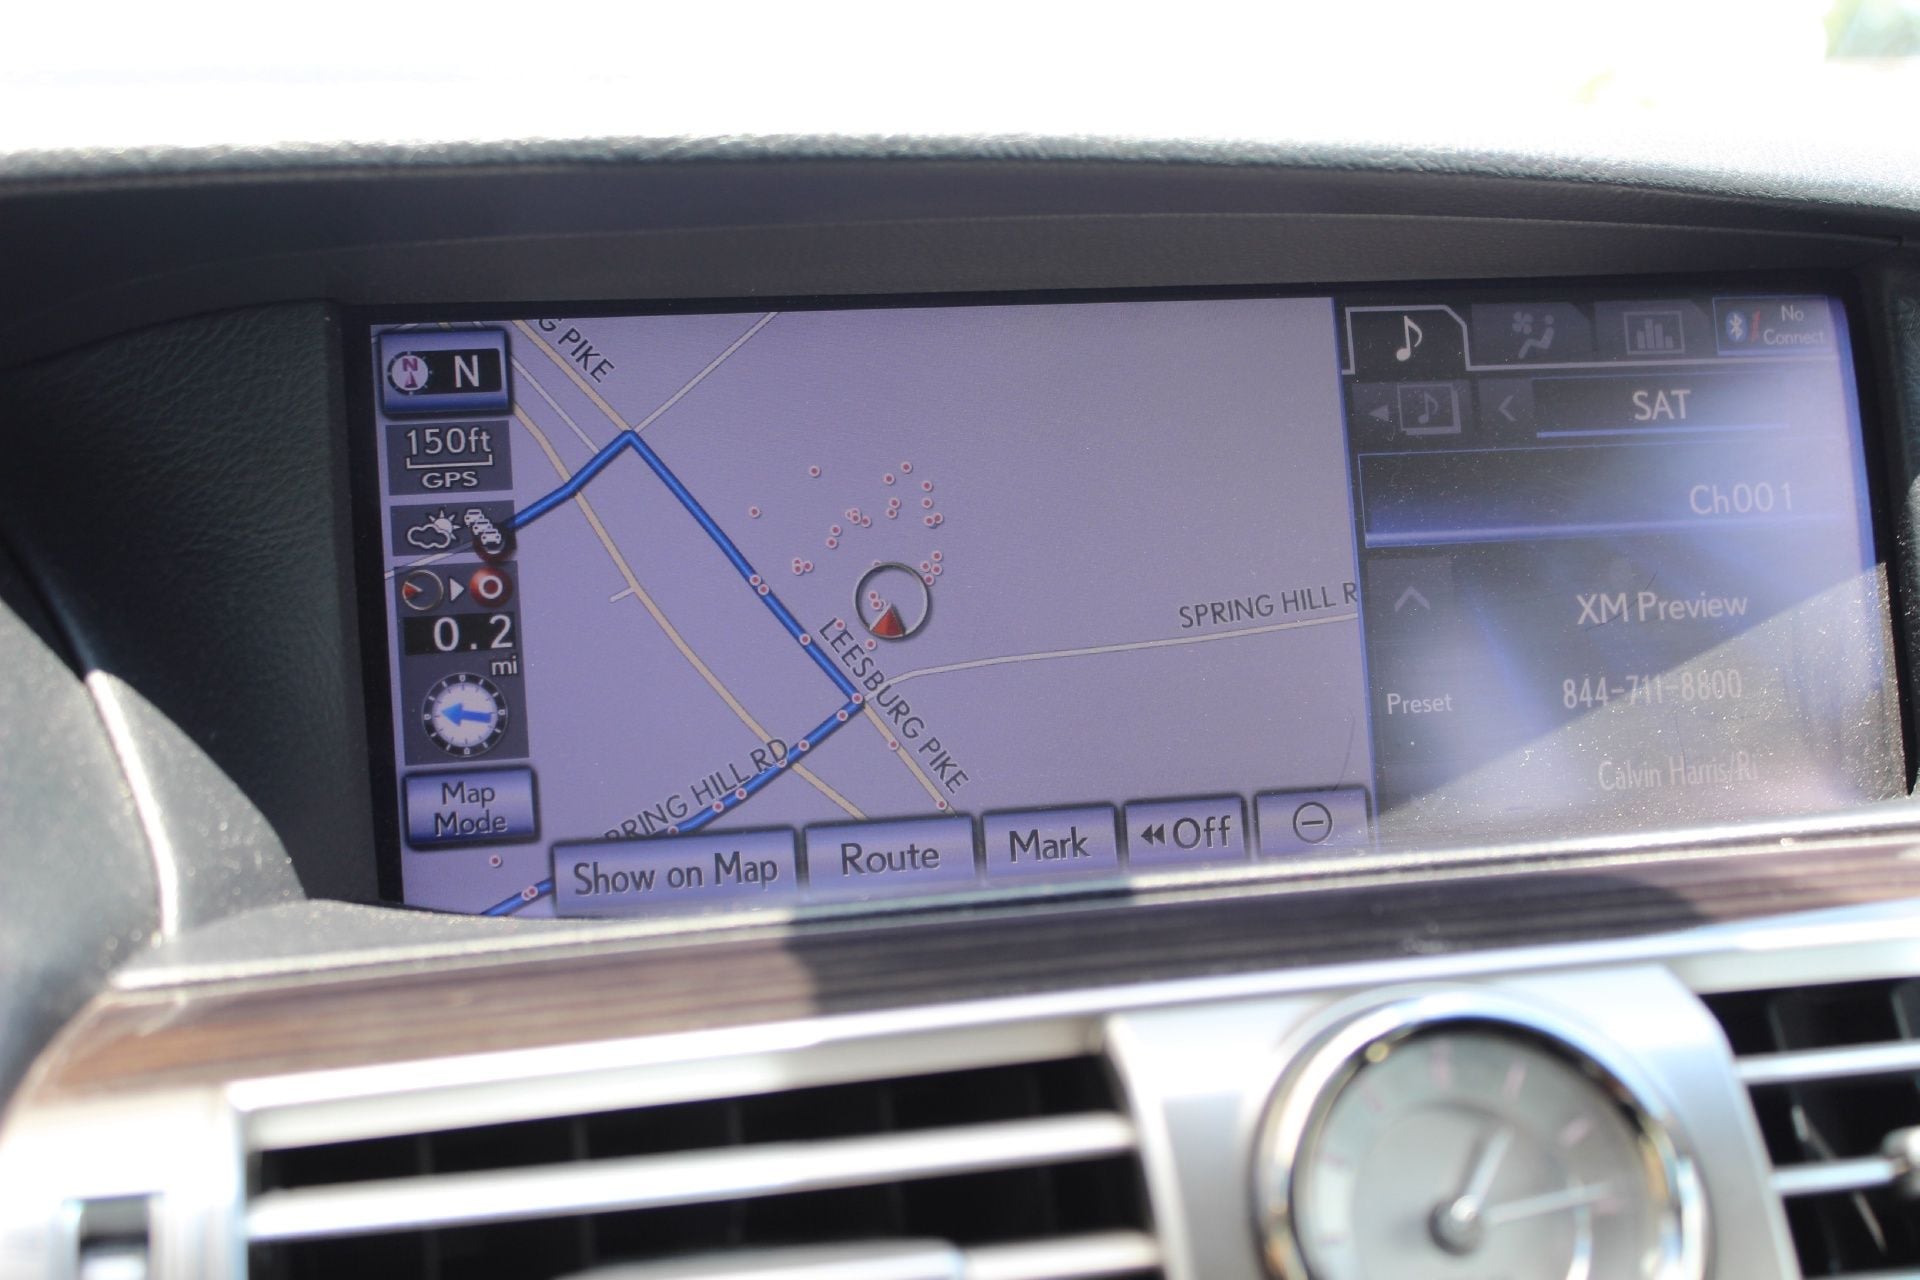 2014 LS 460 Navigation upgrade ClubLexus Lexus Forum